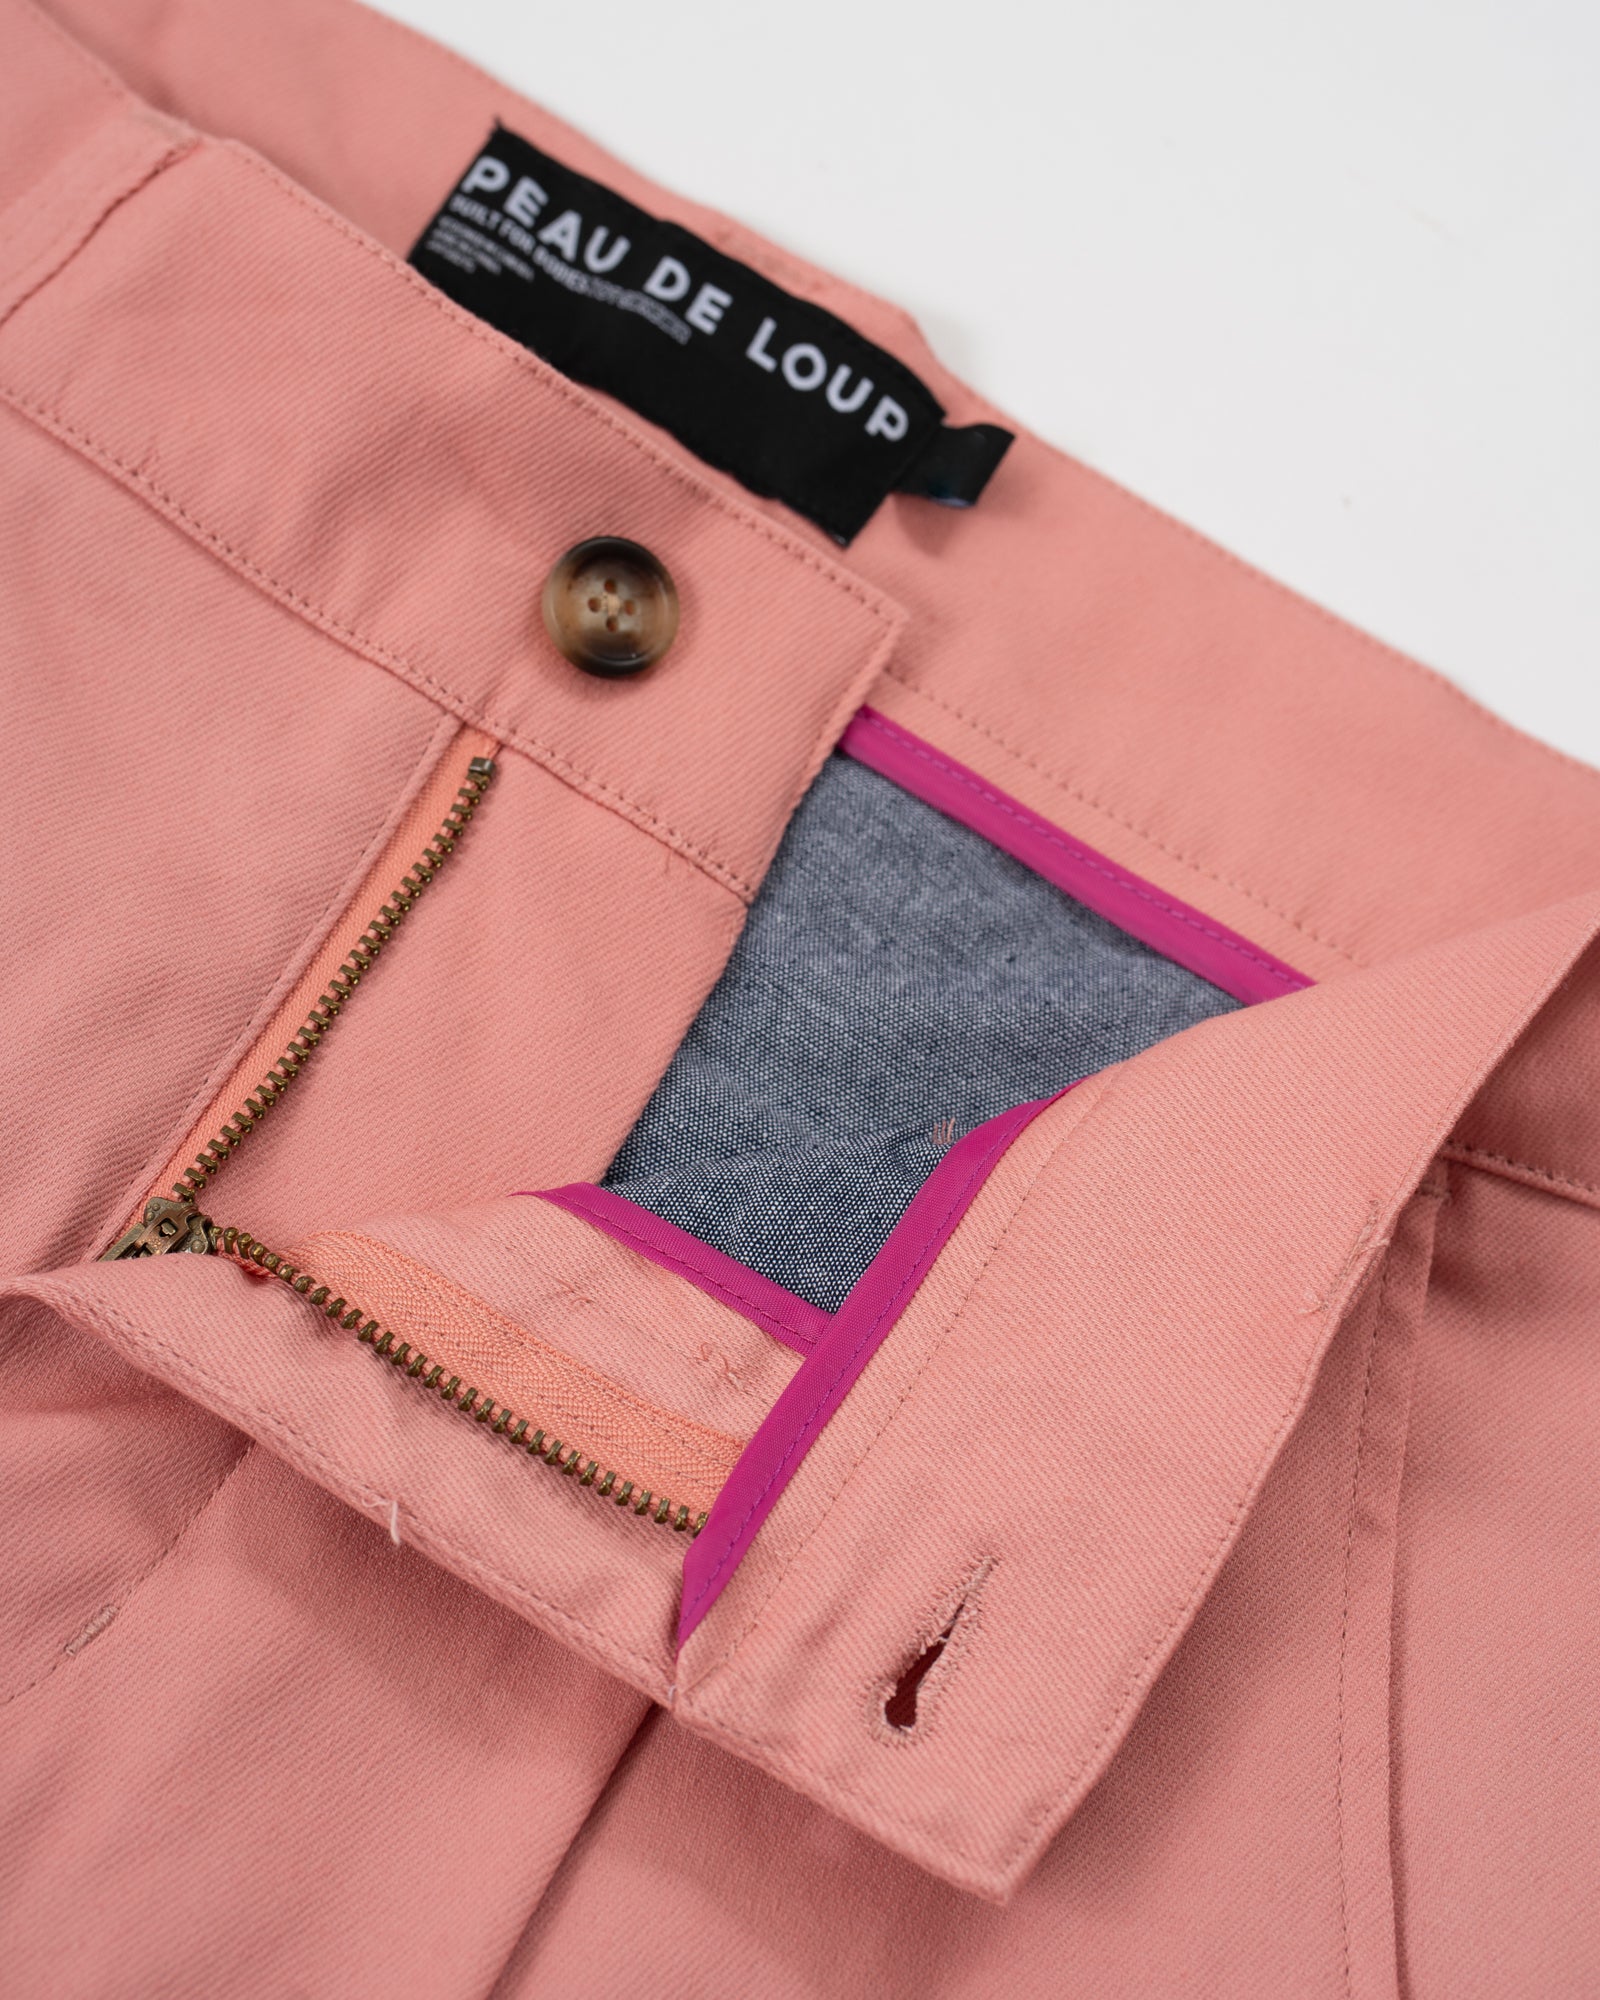 Powder Pink Trouser